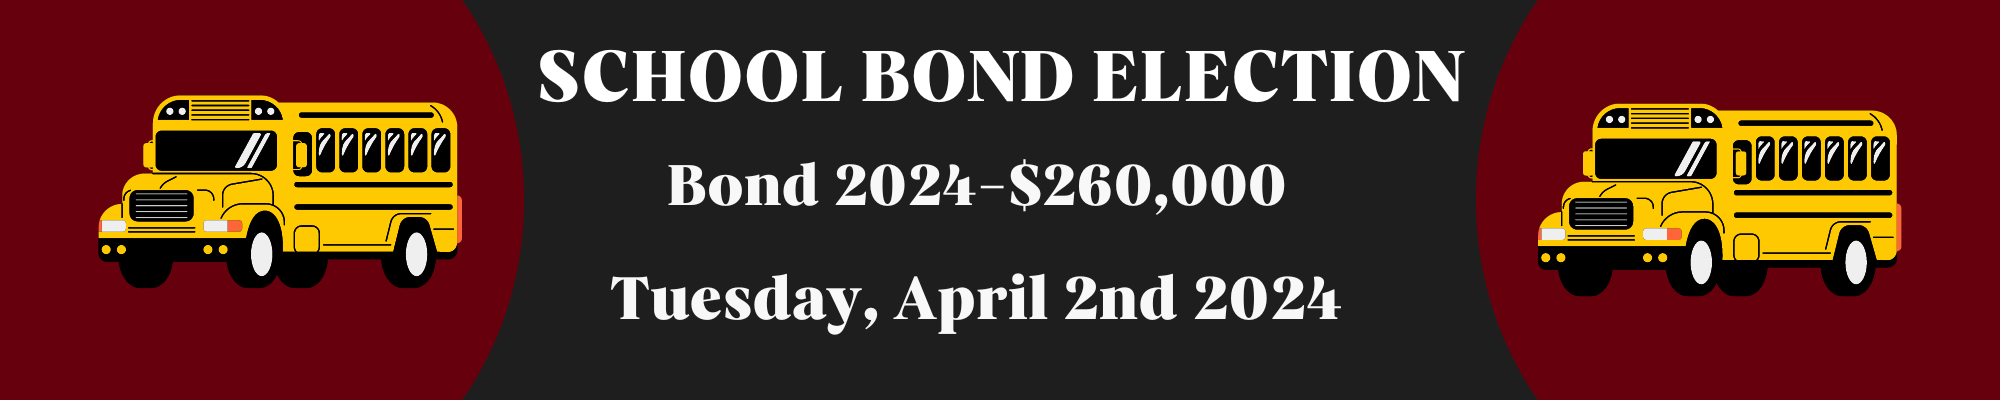 School Bond Election Tuesday April 2nd 2024.  260000